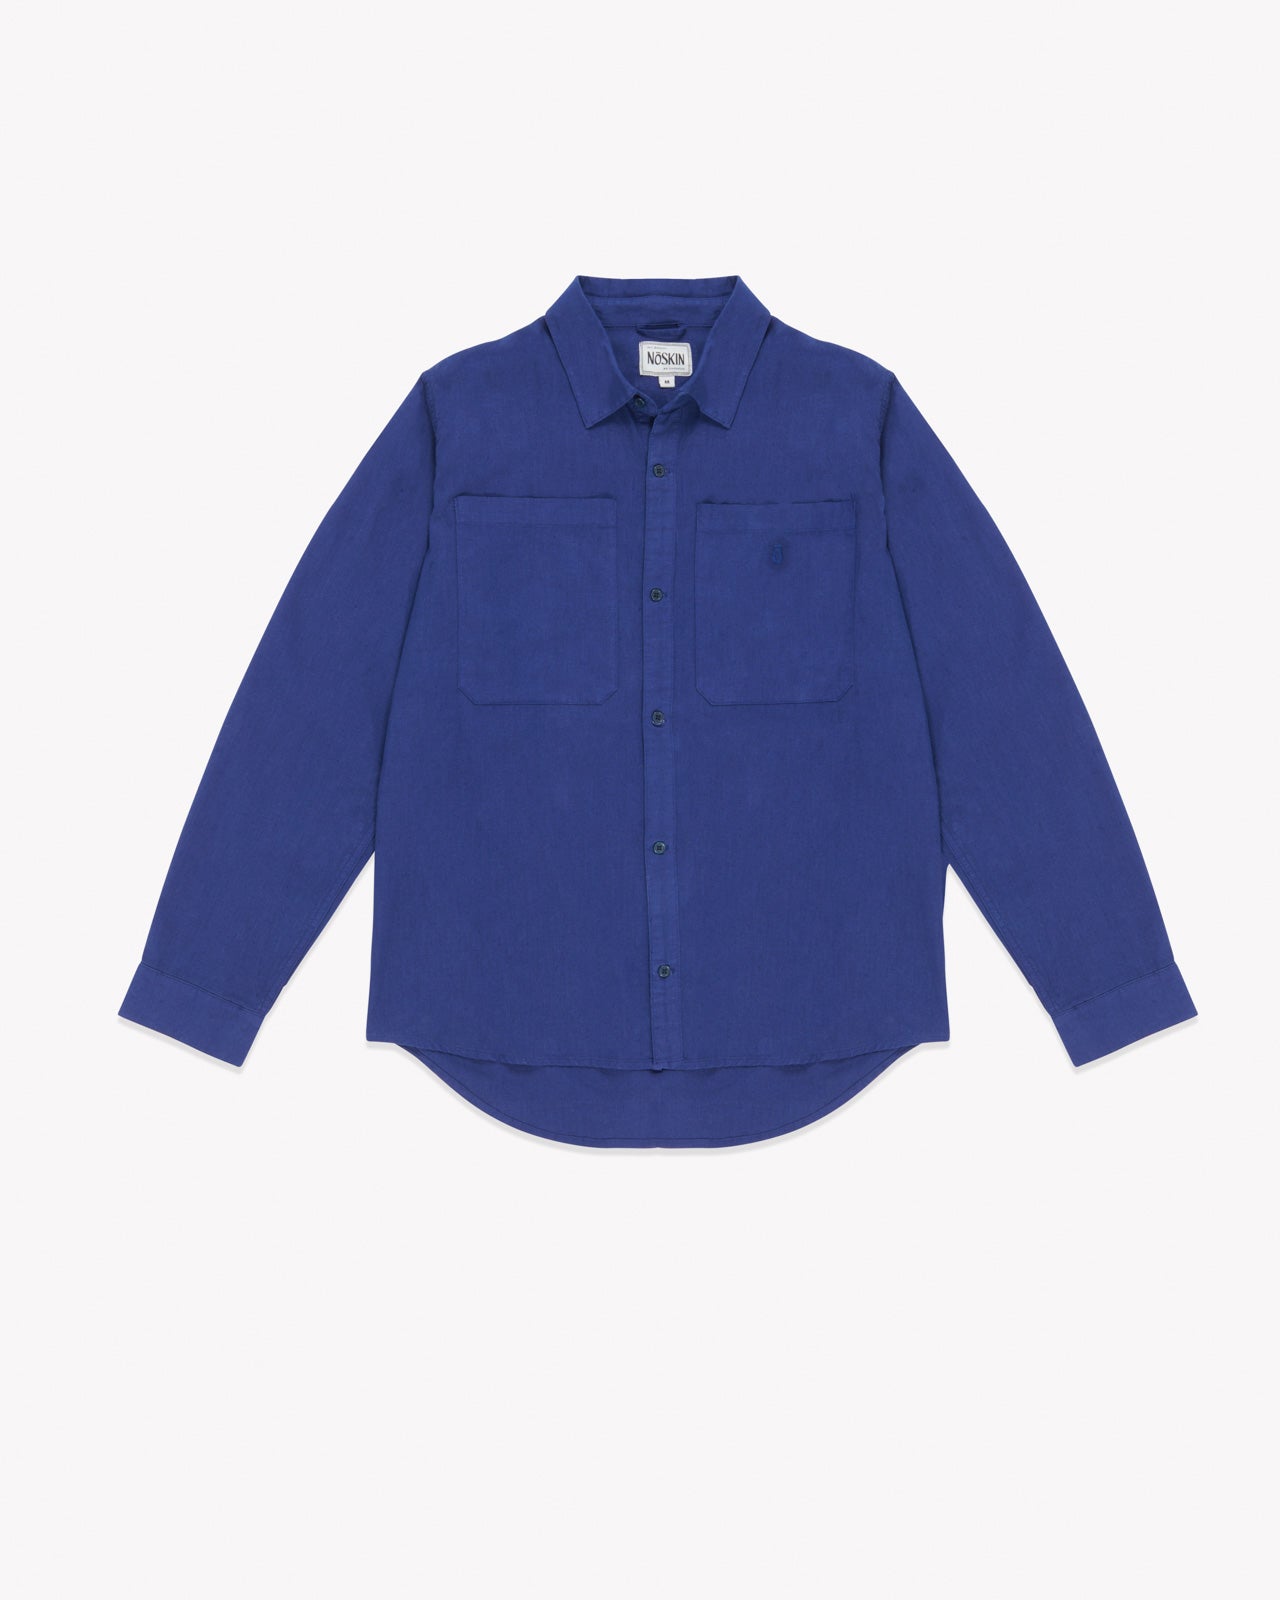 The Noskin Hemp and Organic Cotton Easey Long Sleeve Shirt in blue